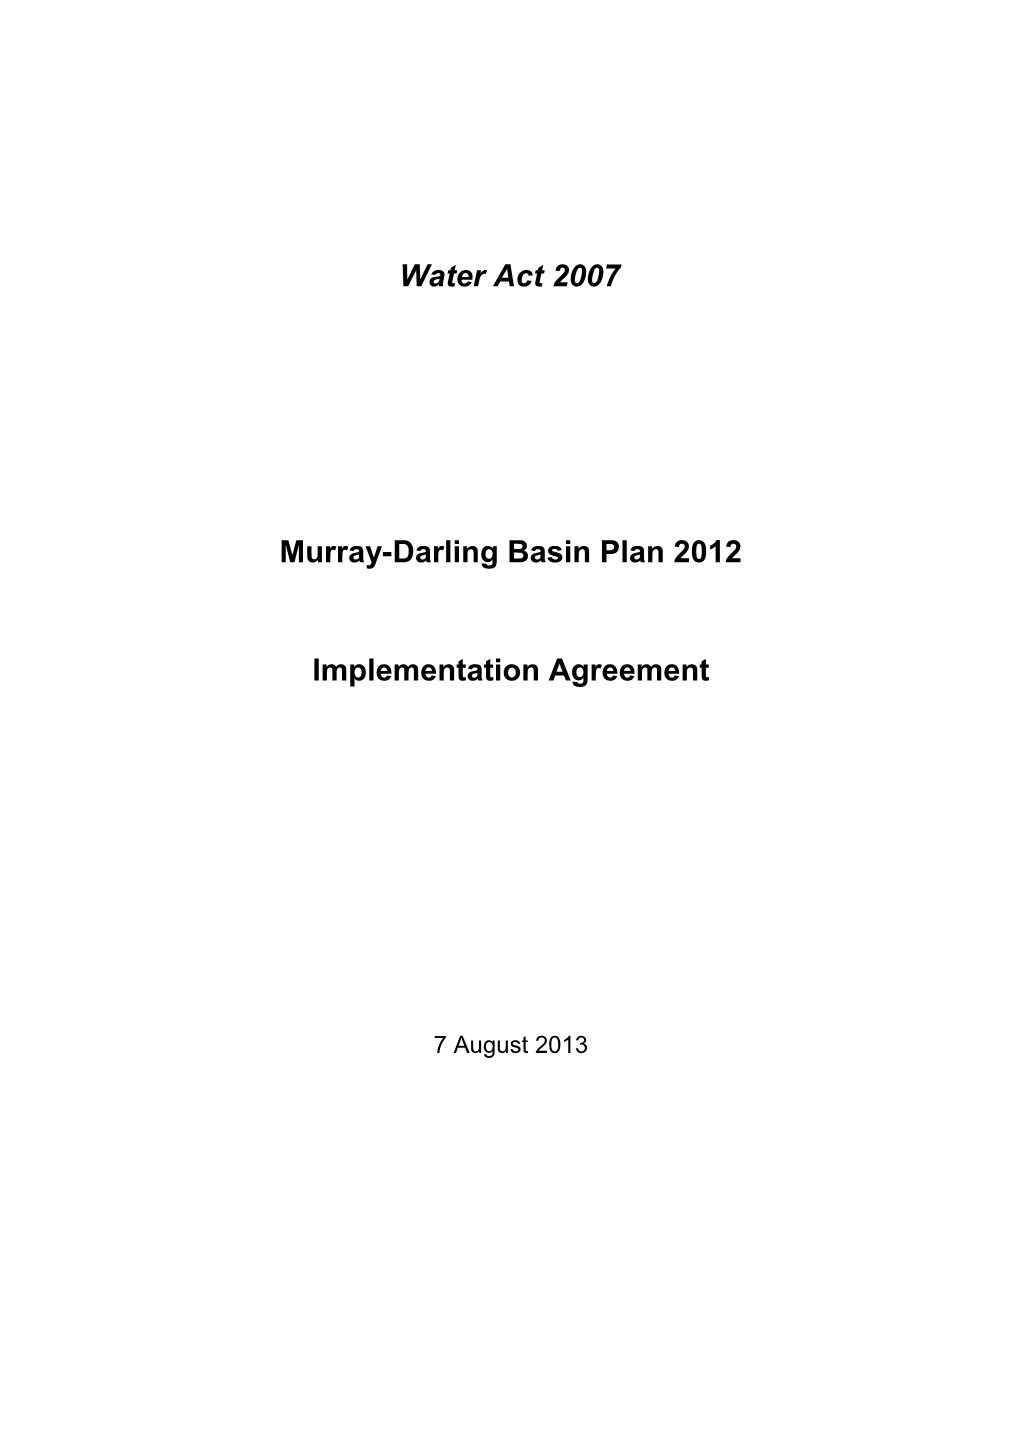 MDB Plan 2012 Implementation Agreement Final 7 Aug 2013